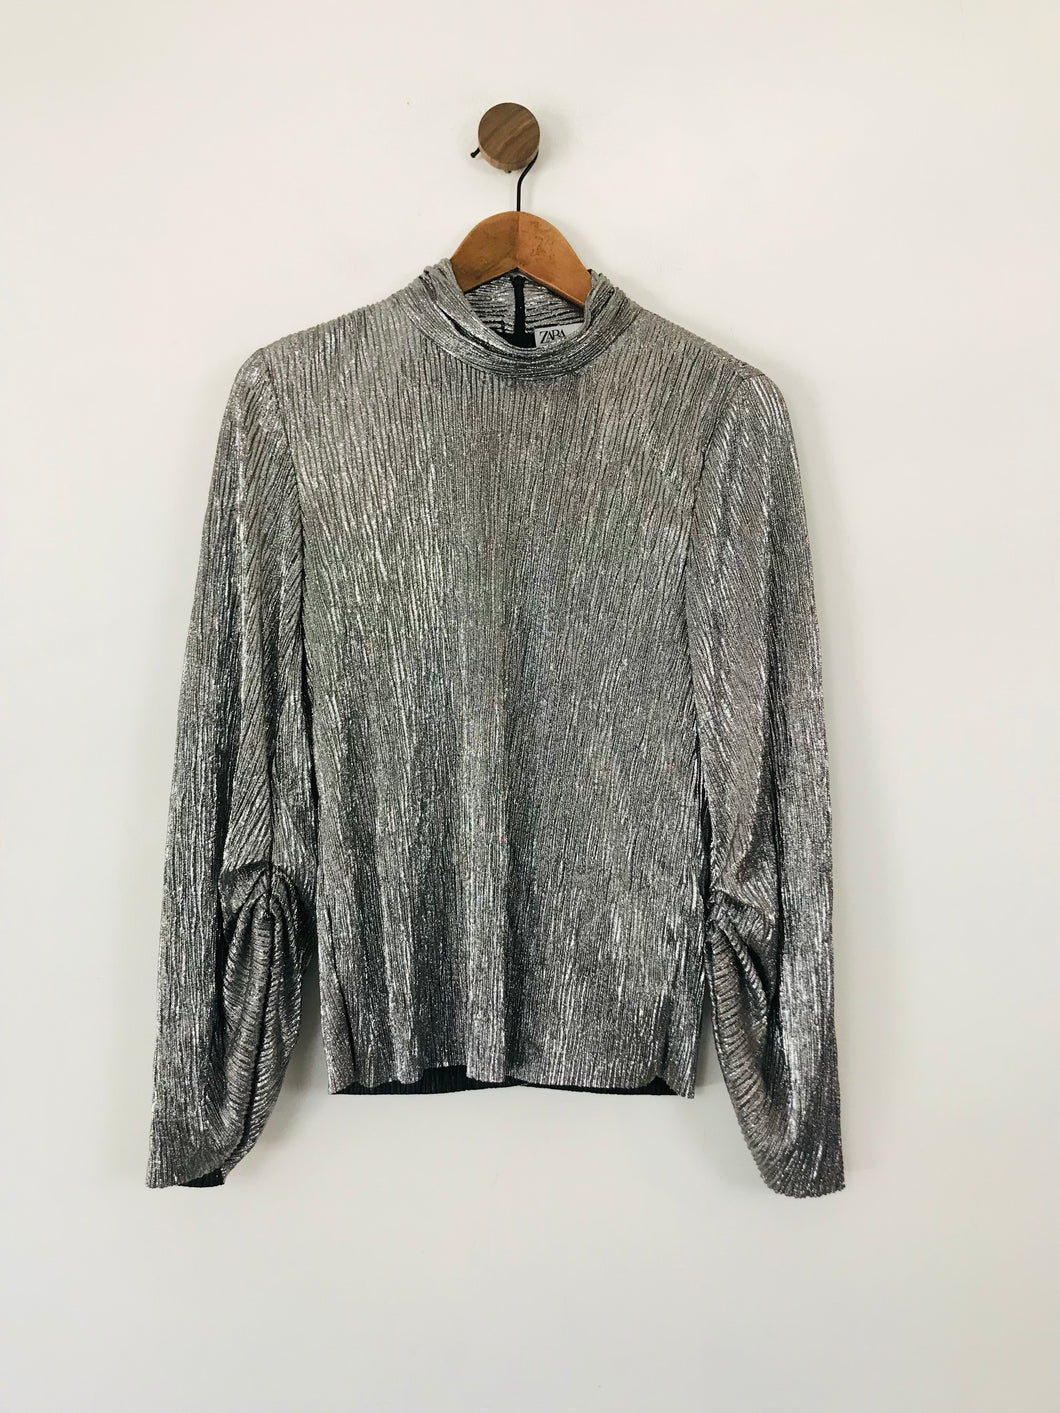 Zara Women's Metallic Blouse | M UK10-12 | Grey